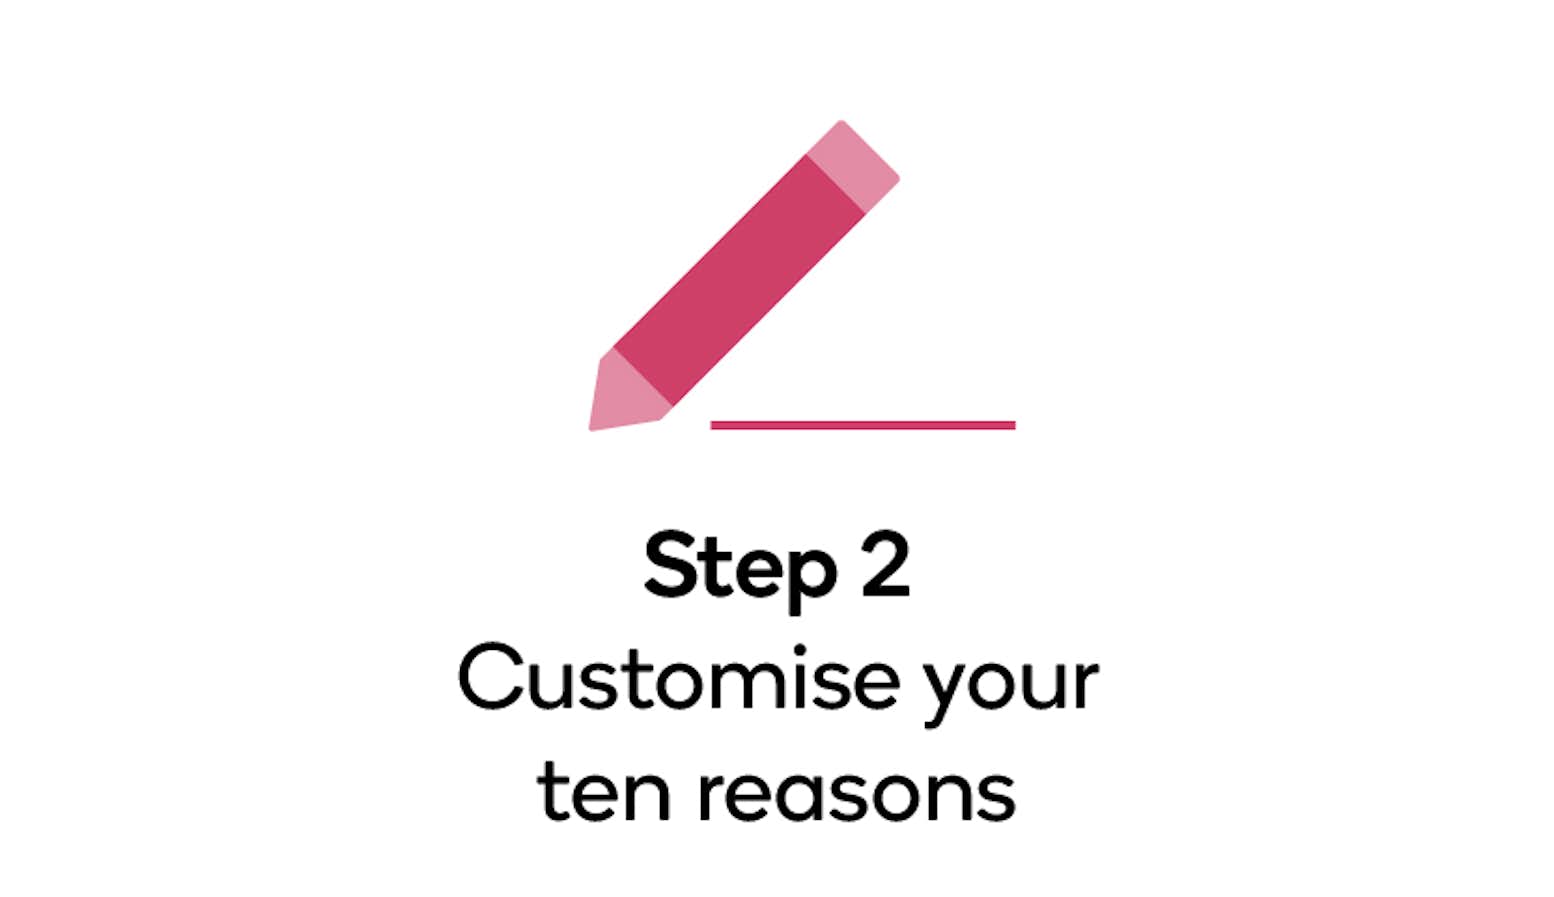 Customise your ten reasons